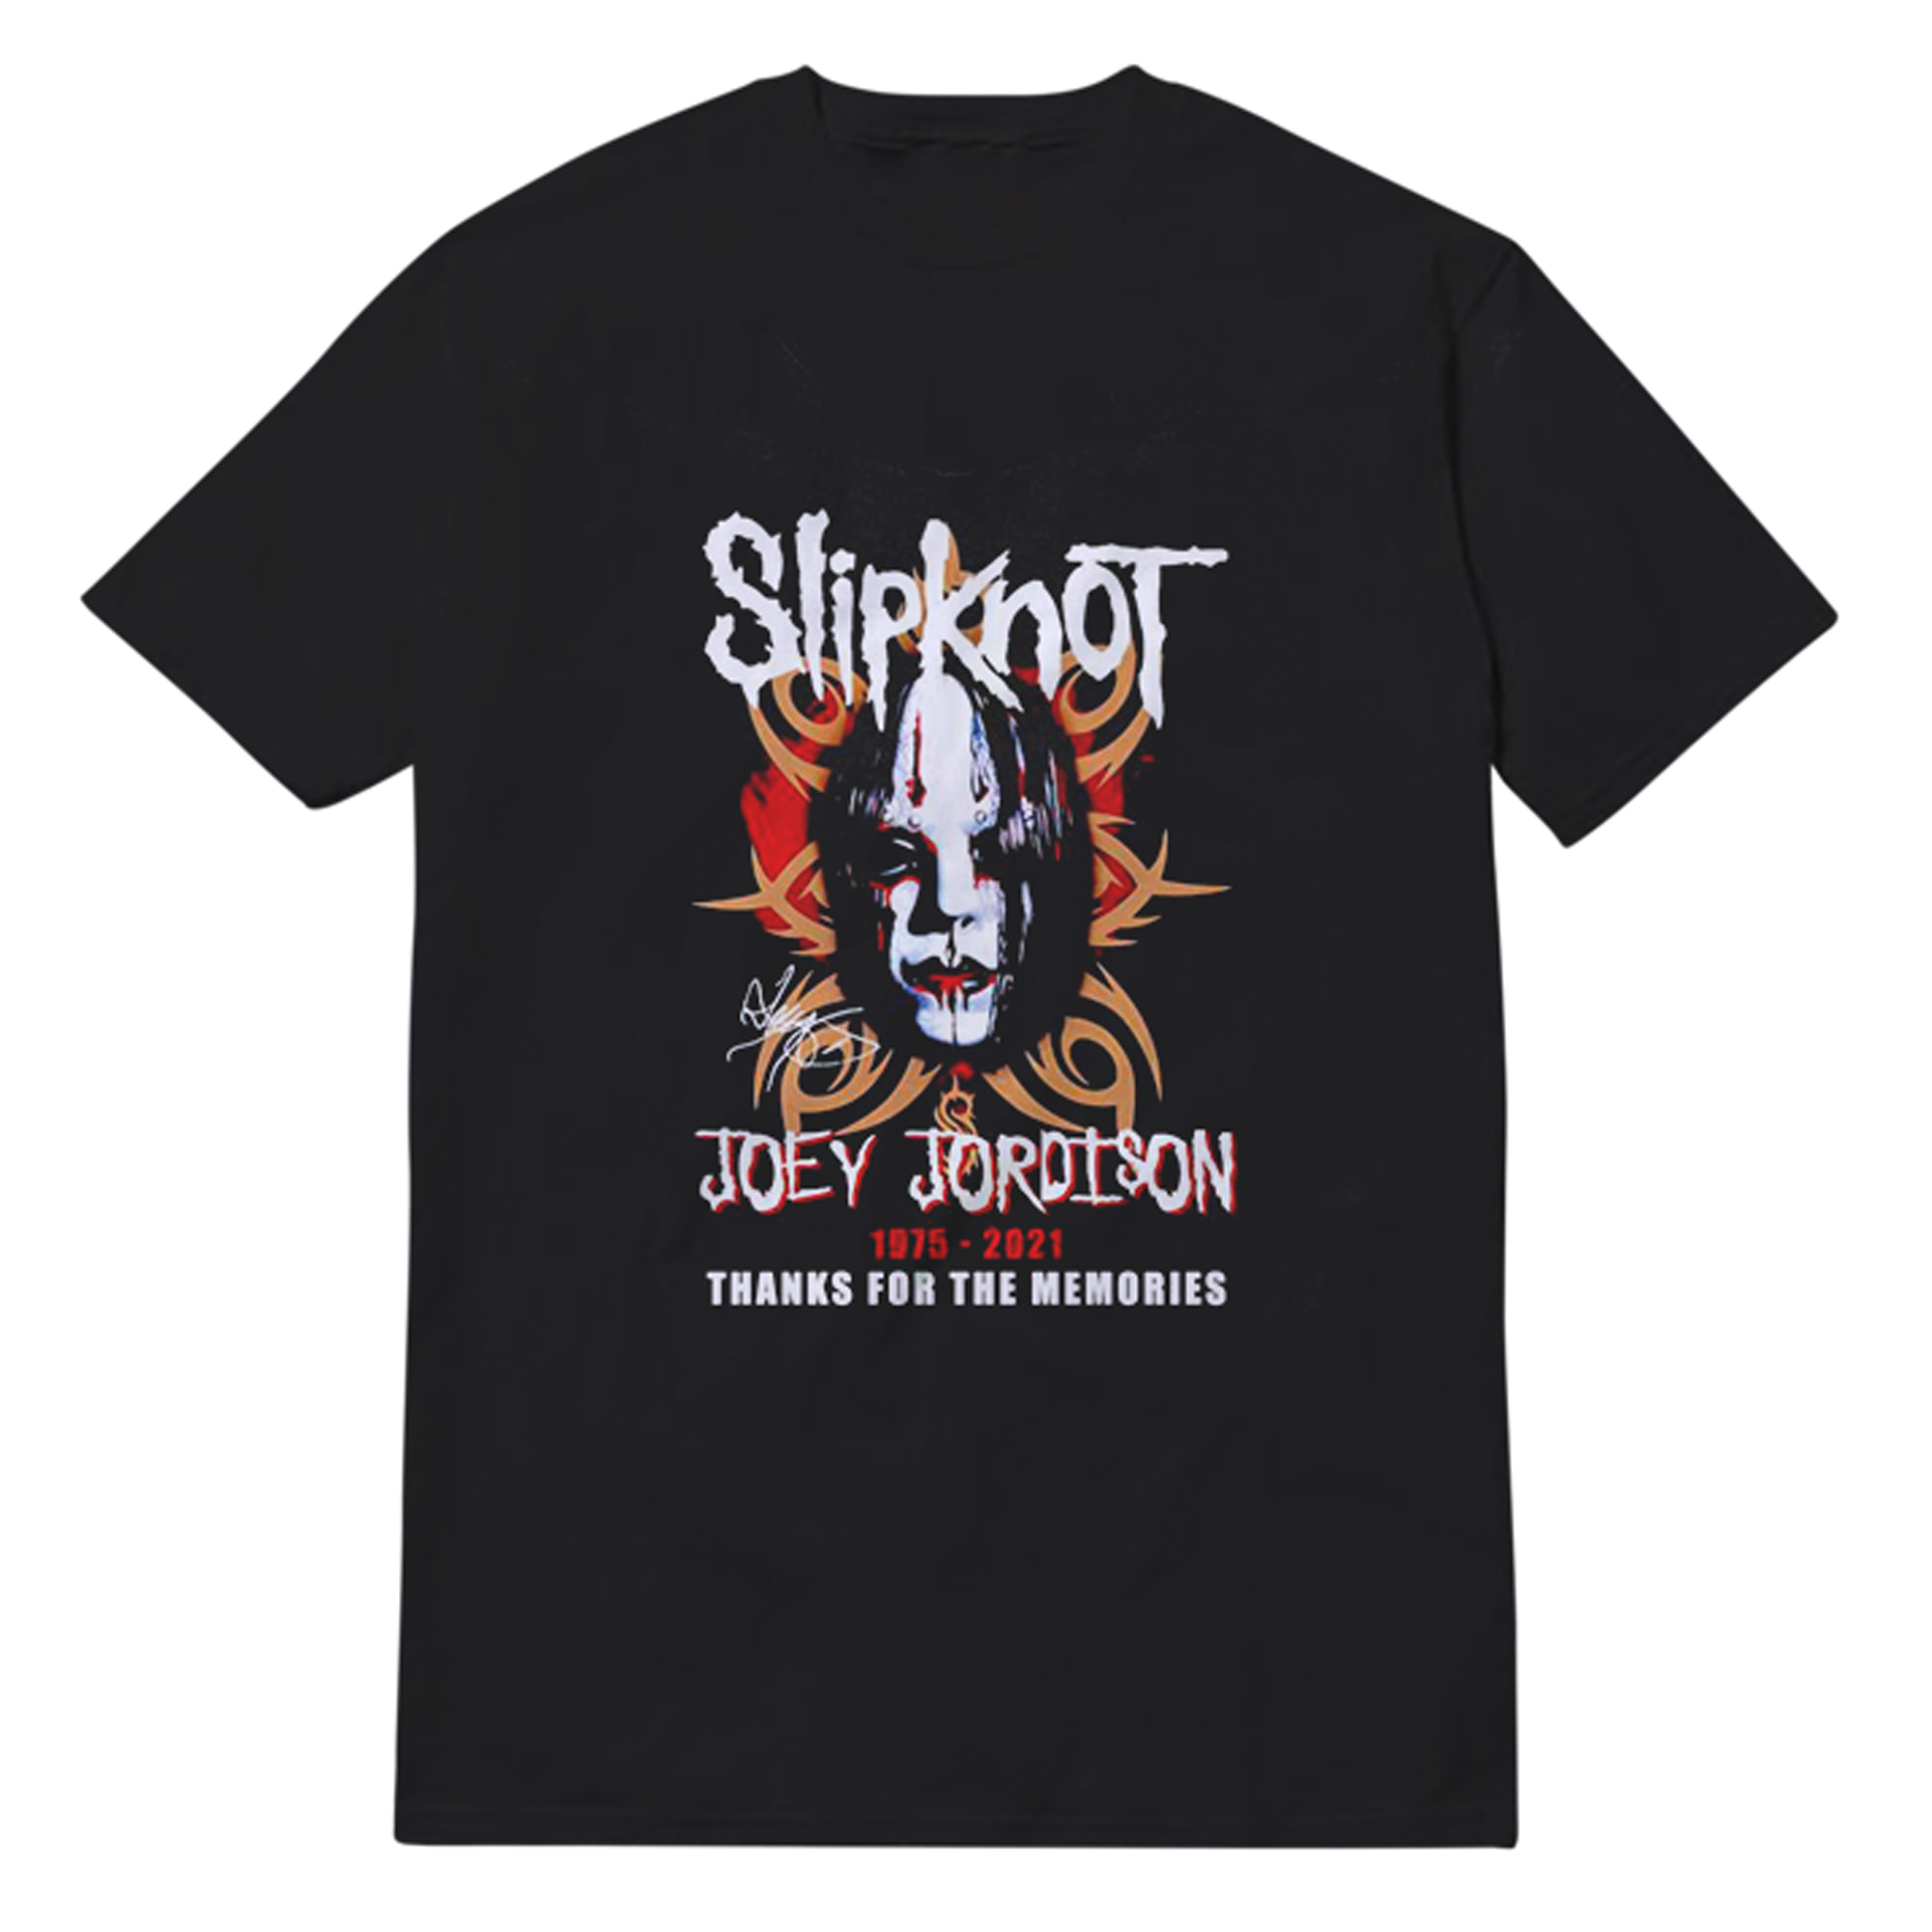 Vintage Slipknot R.I.P Joey Jordison Black T-Shirt Unisex - Graphic Tee